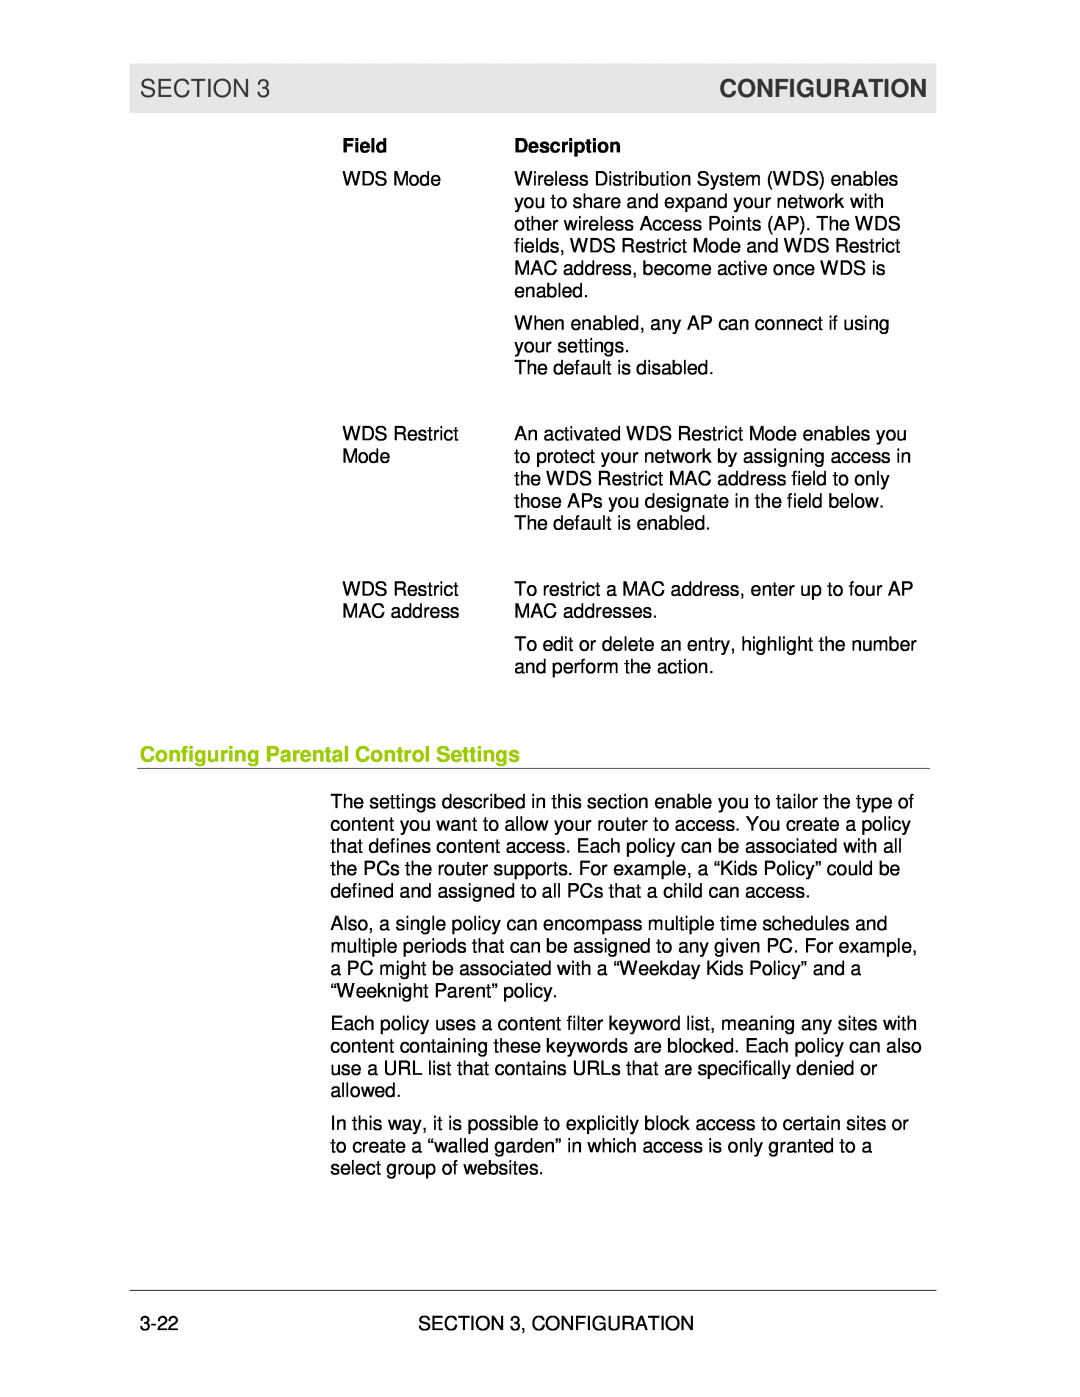 Motorola WR850G manual Configuring Parental Control Settings, Section, Configuration, Field, Description 